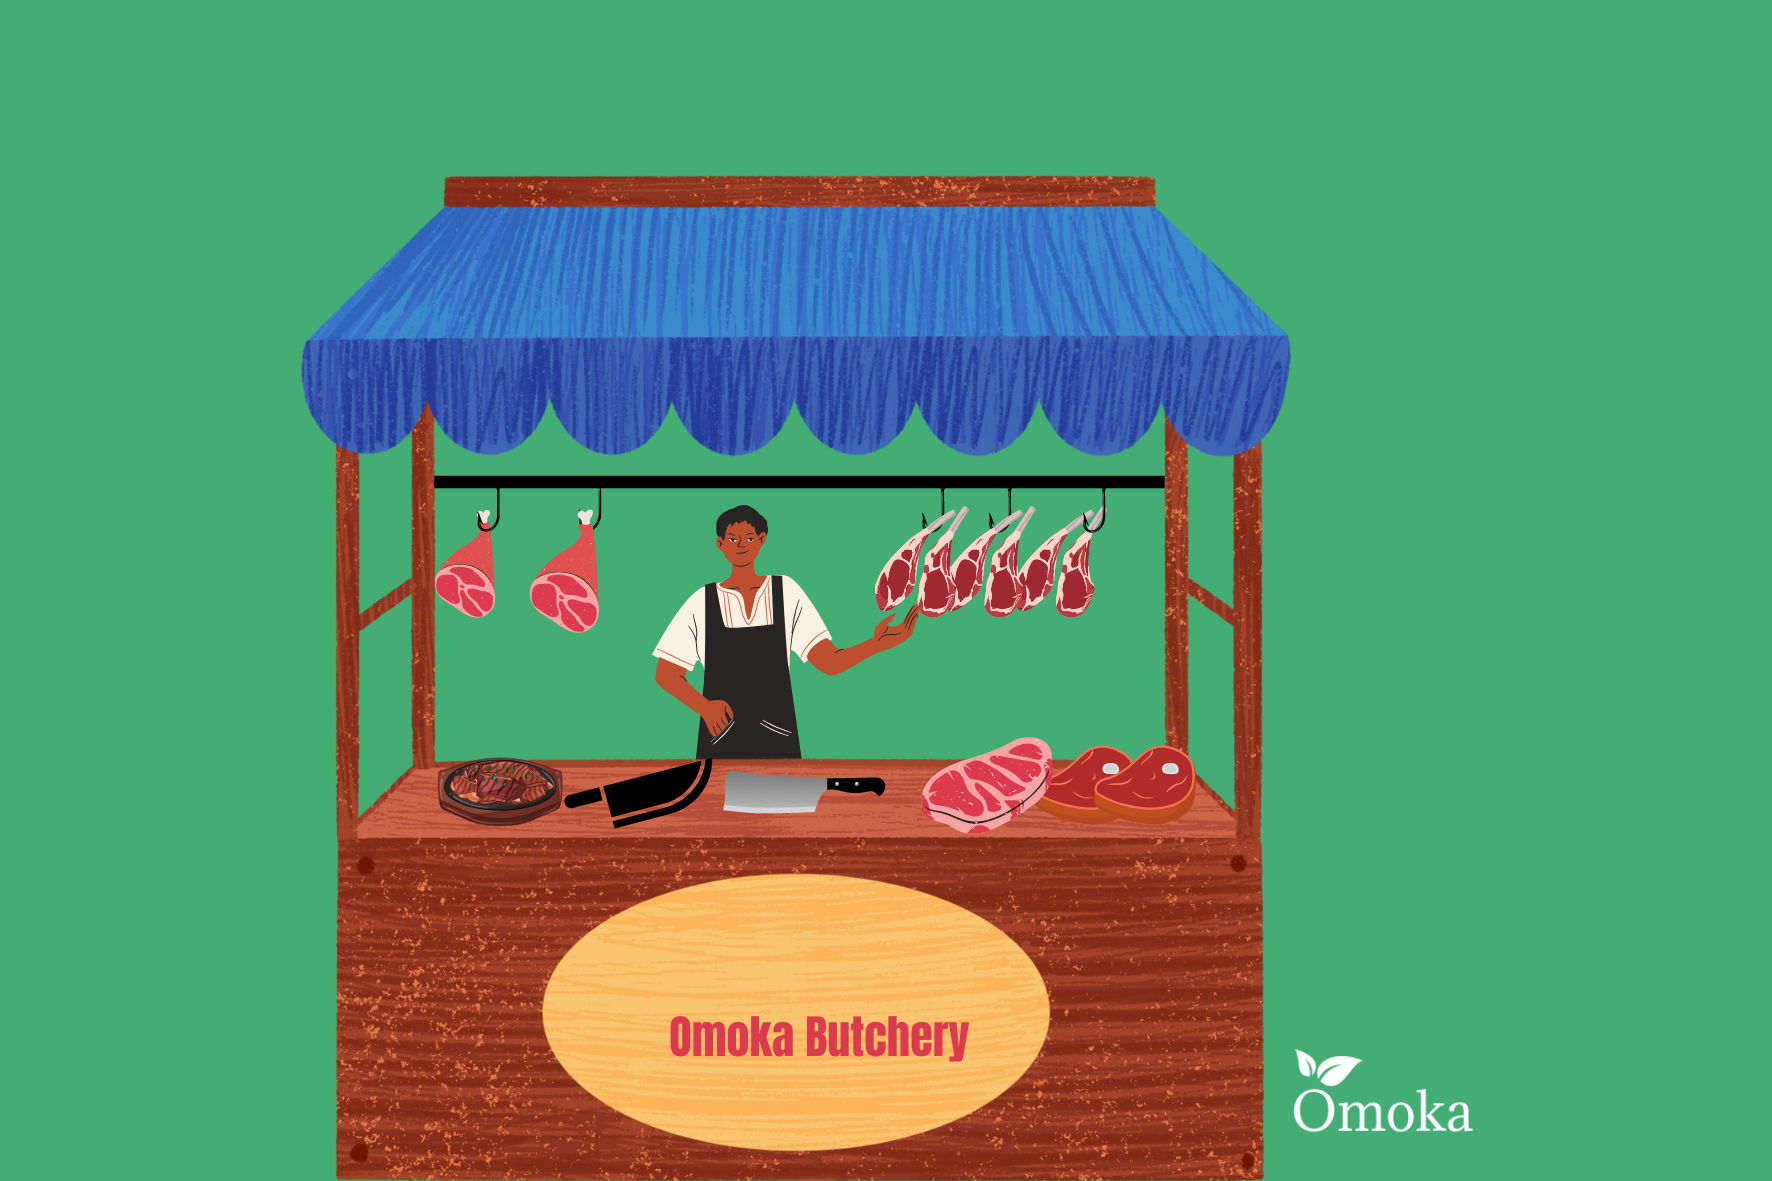 Butchery Business in Kenya